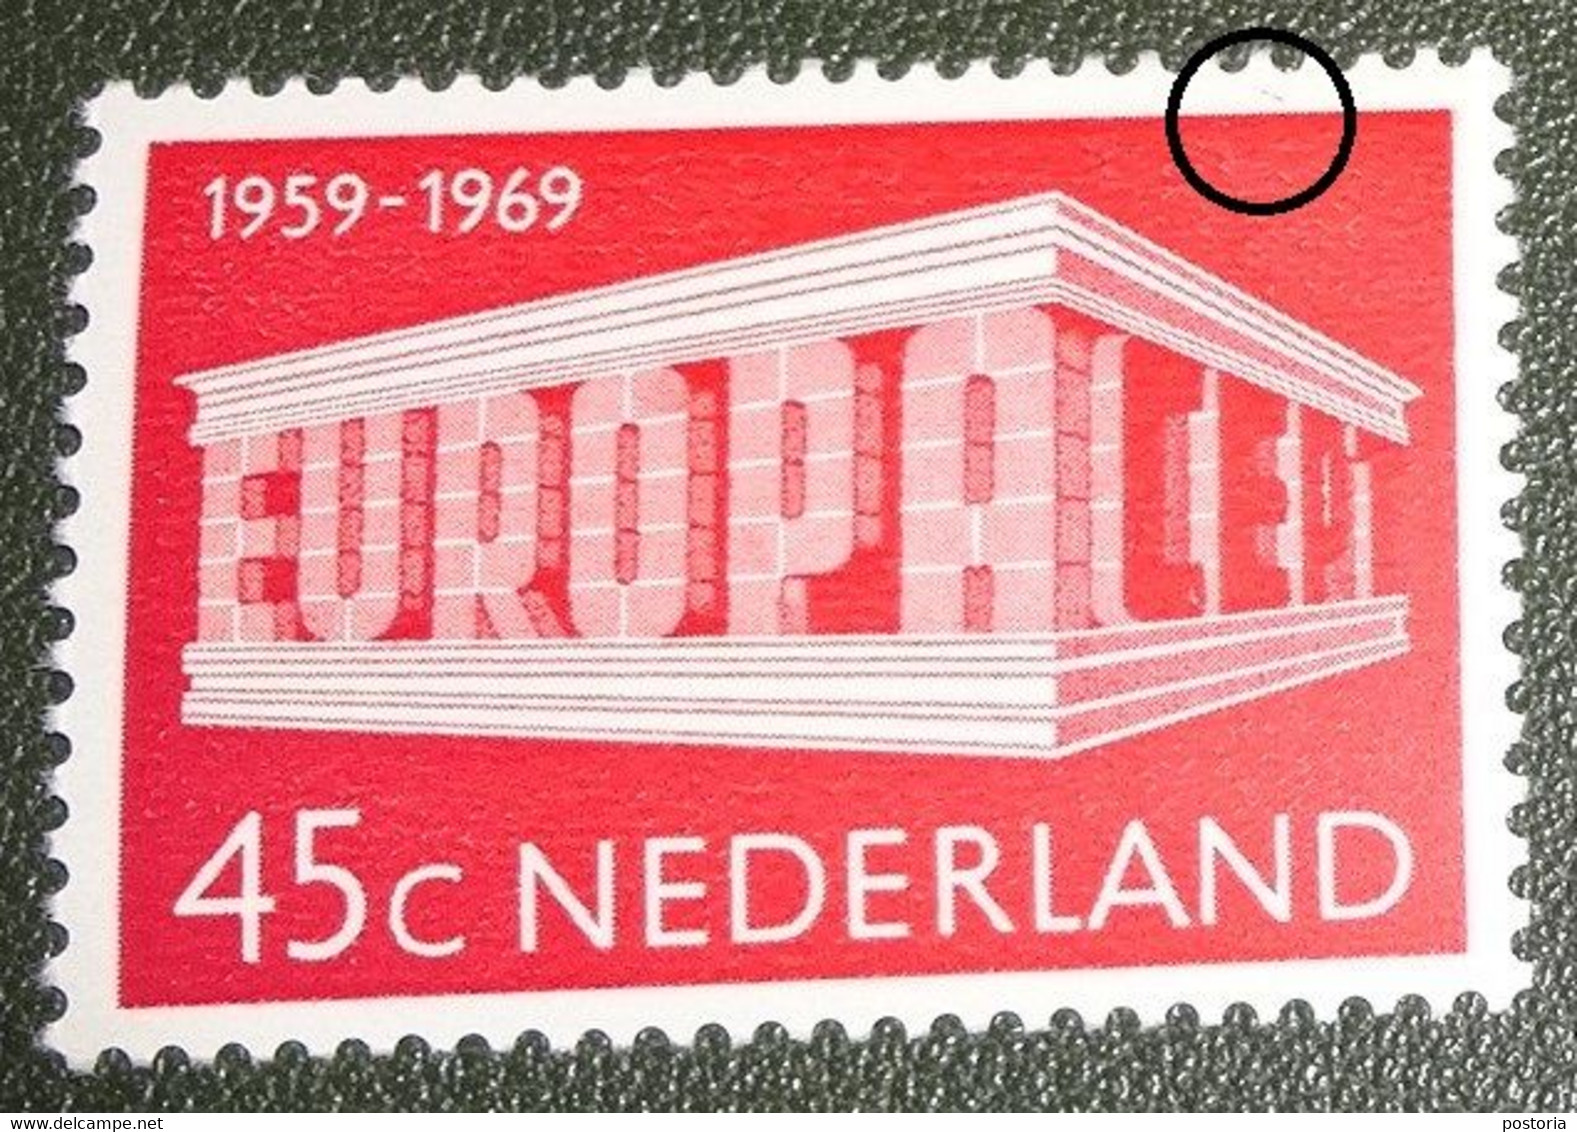 Nederland - MAST - 926 PM1 - 1969 - Plaatfout - Postfris - Diagonaal Krasje In Zegelrand - Variétés Et Curiosités